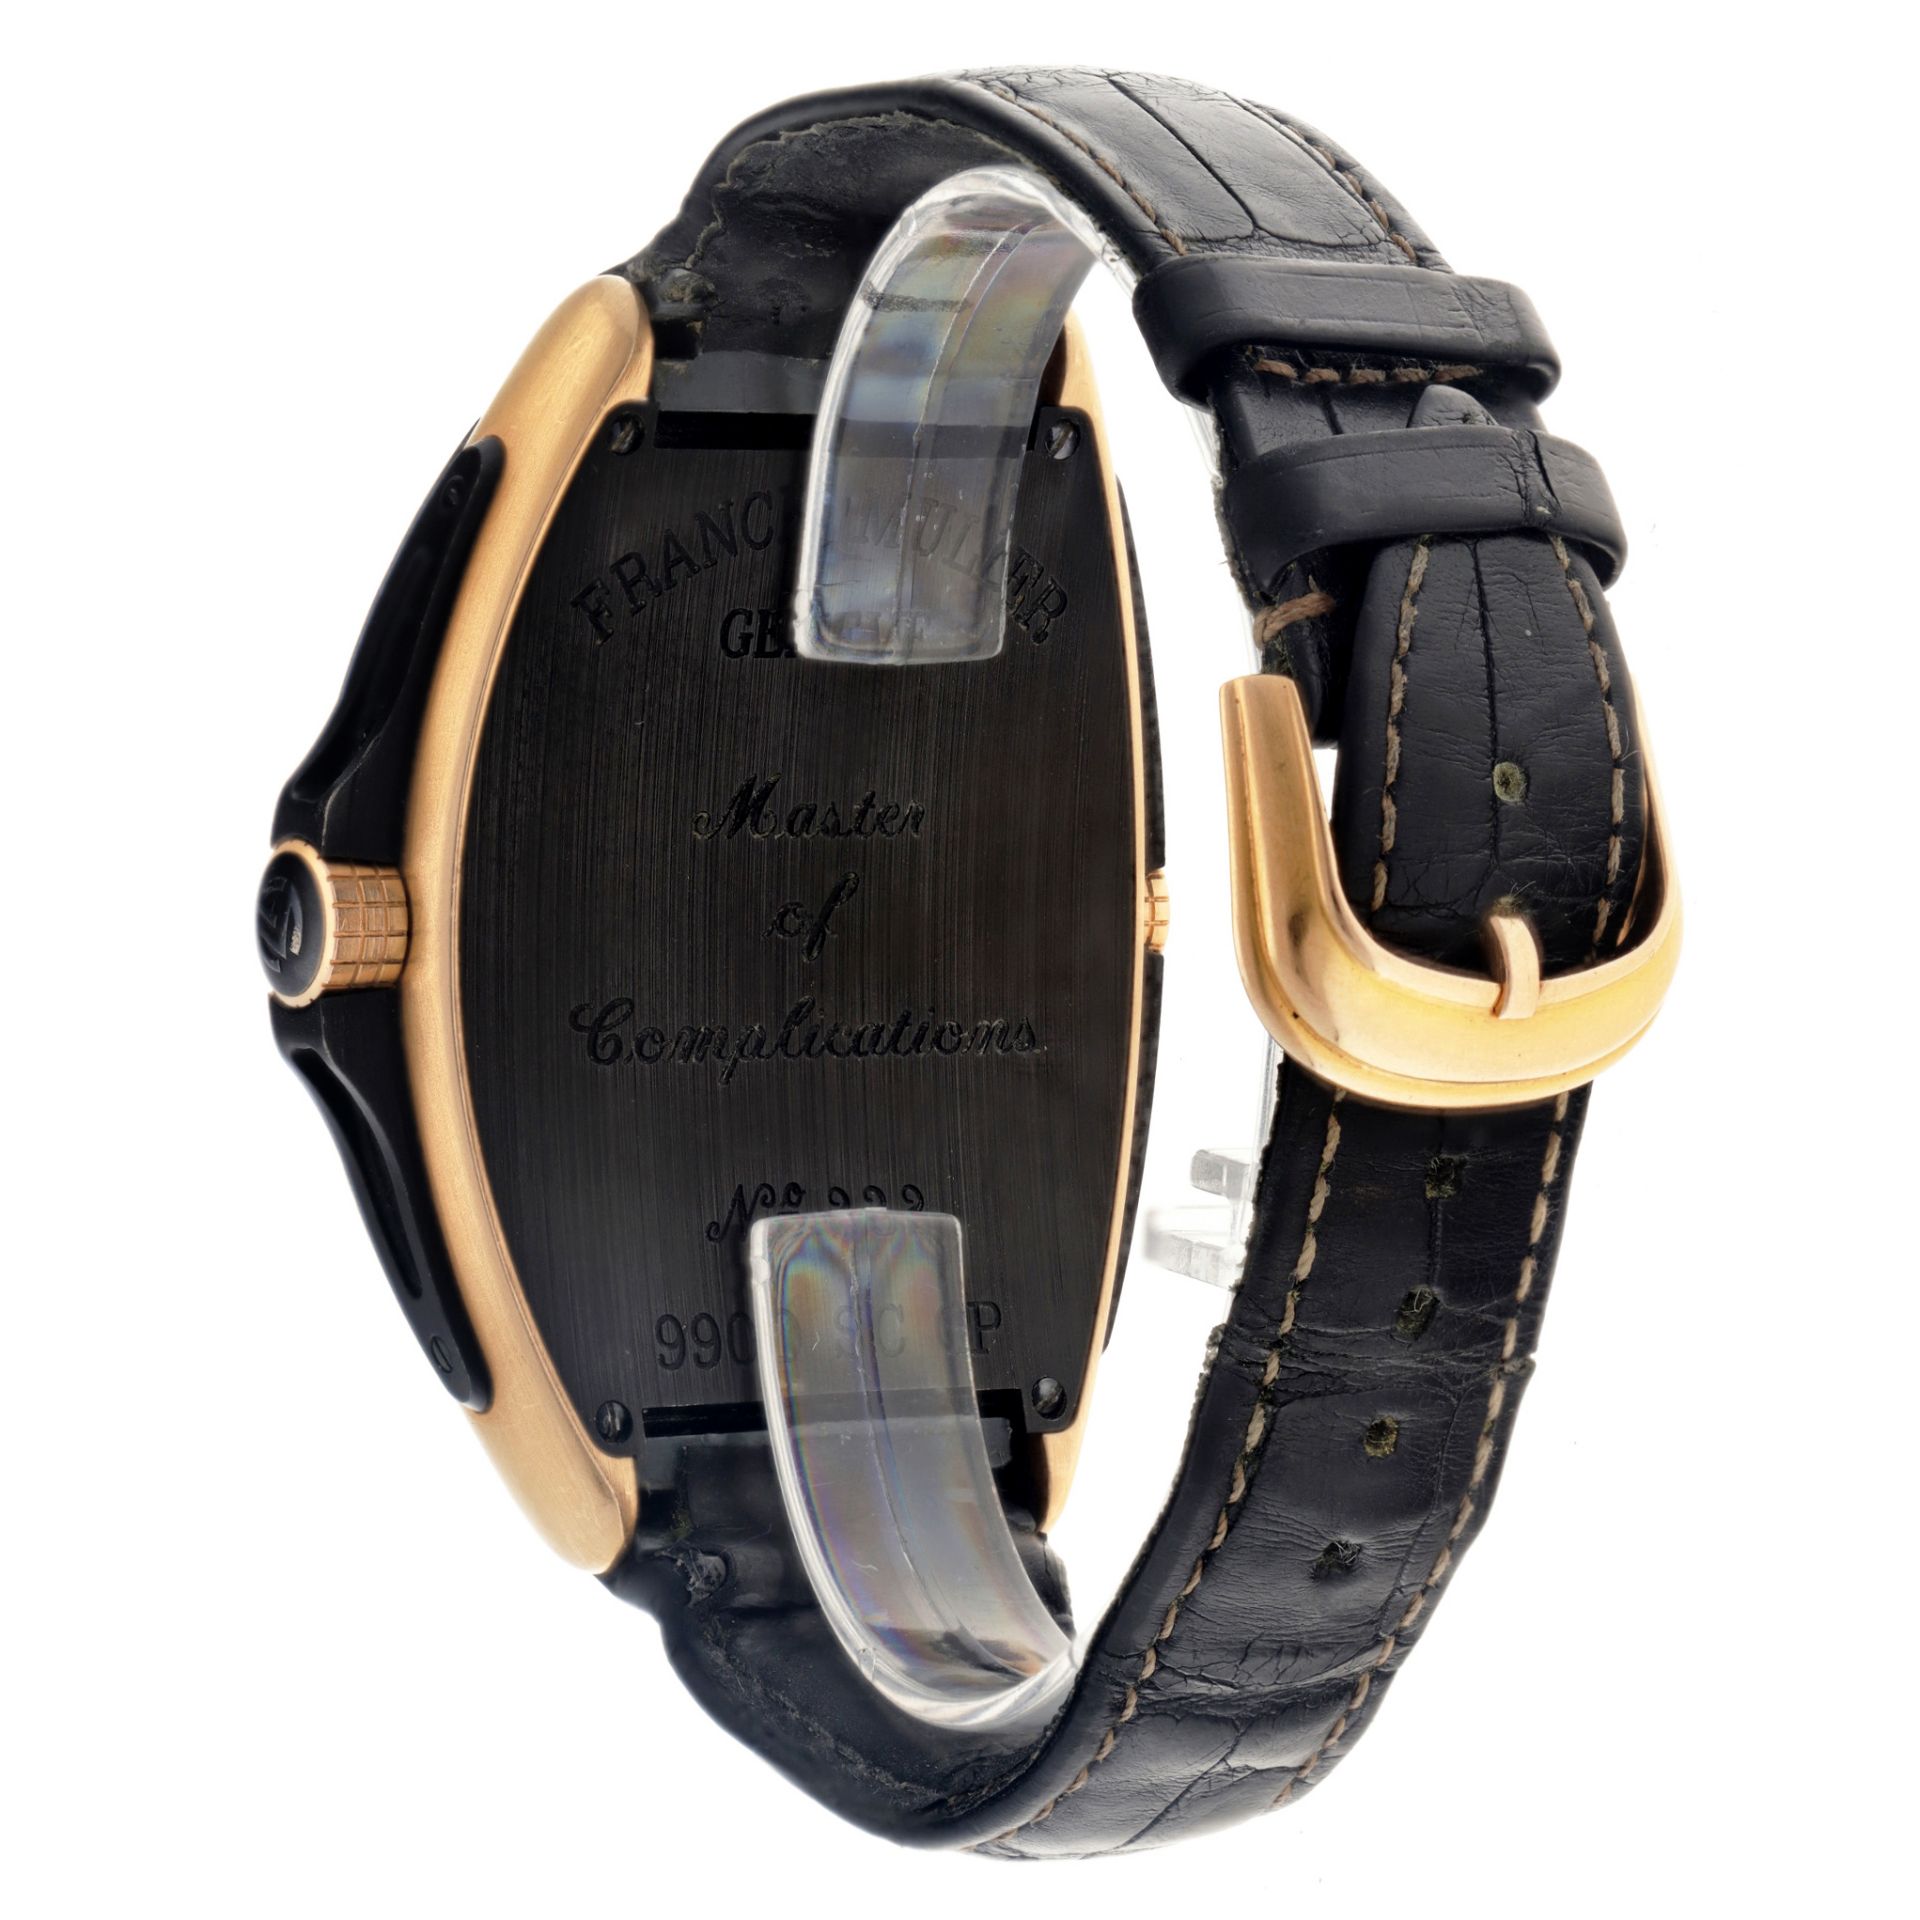 Frank Muller Conquistador GPG 9900 SC GP - Men's watch. - Image 3 of 7